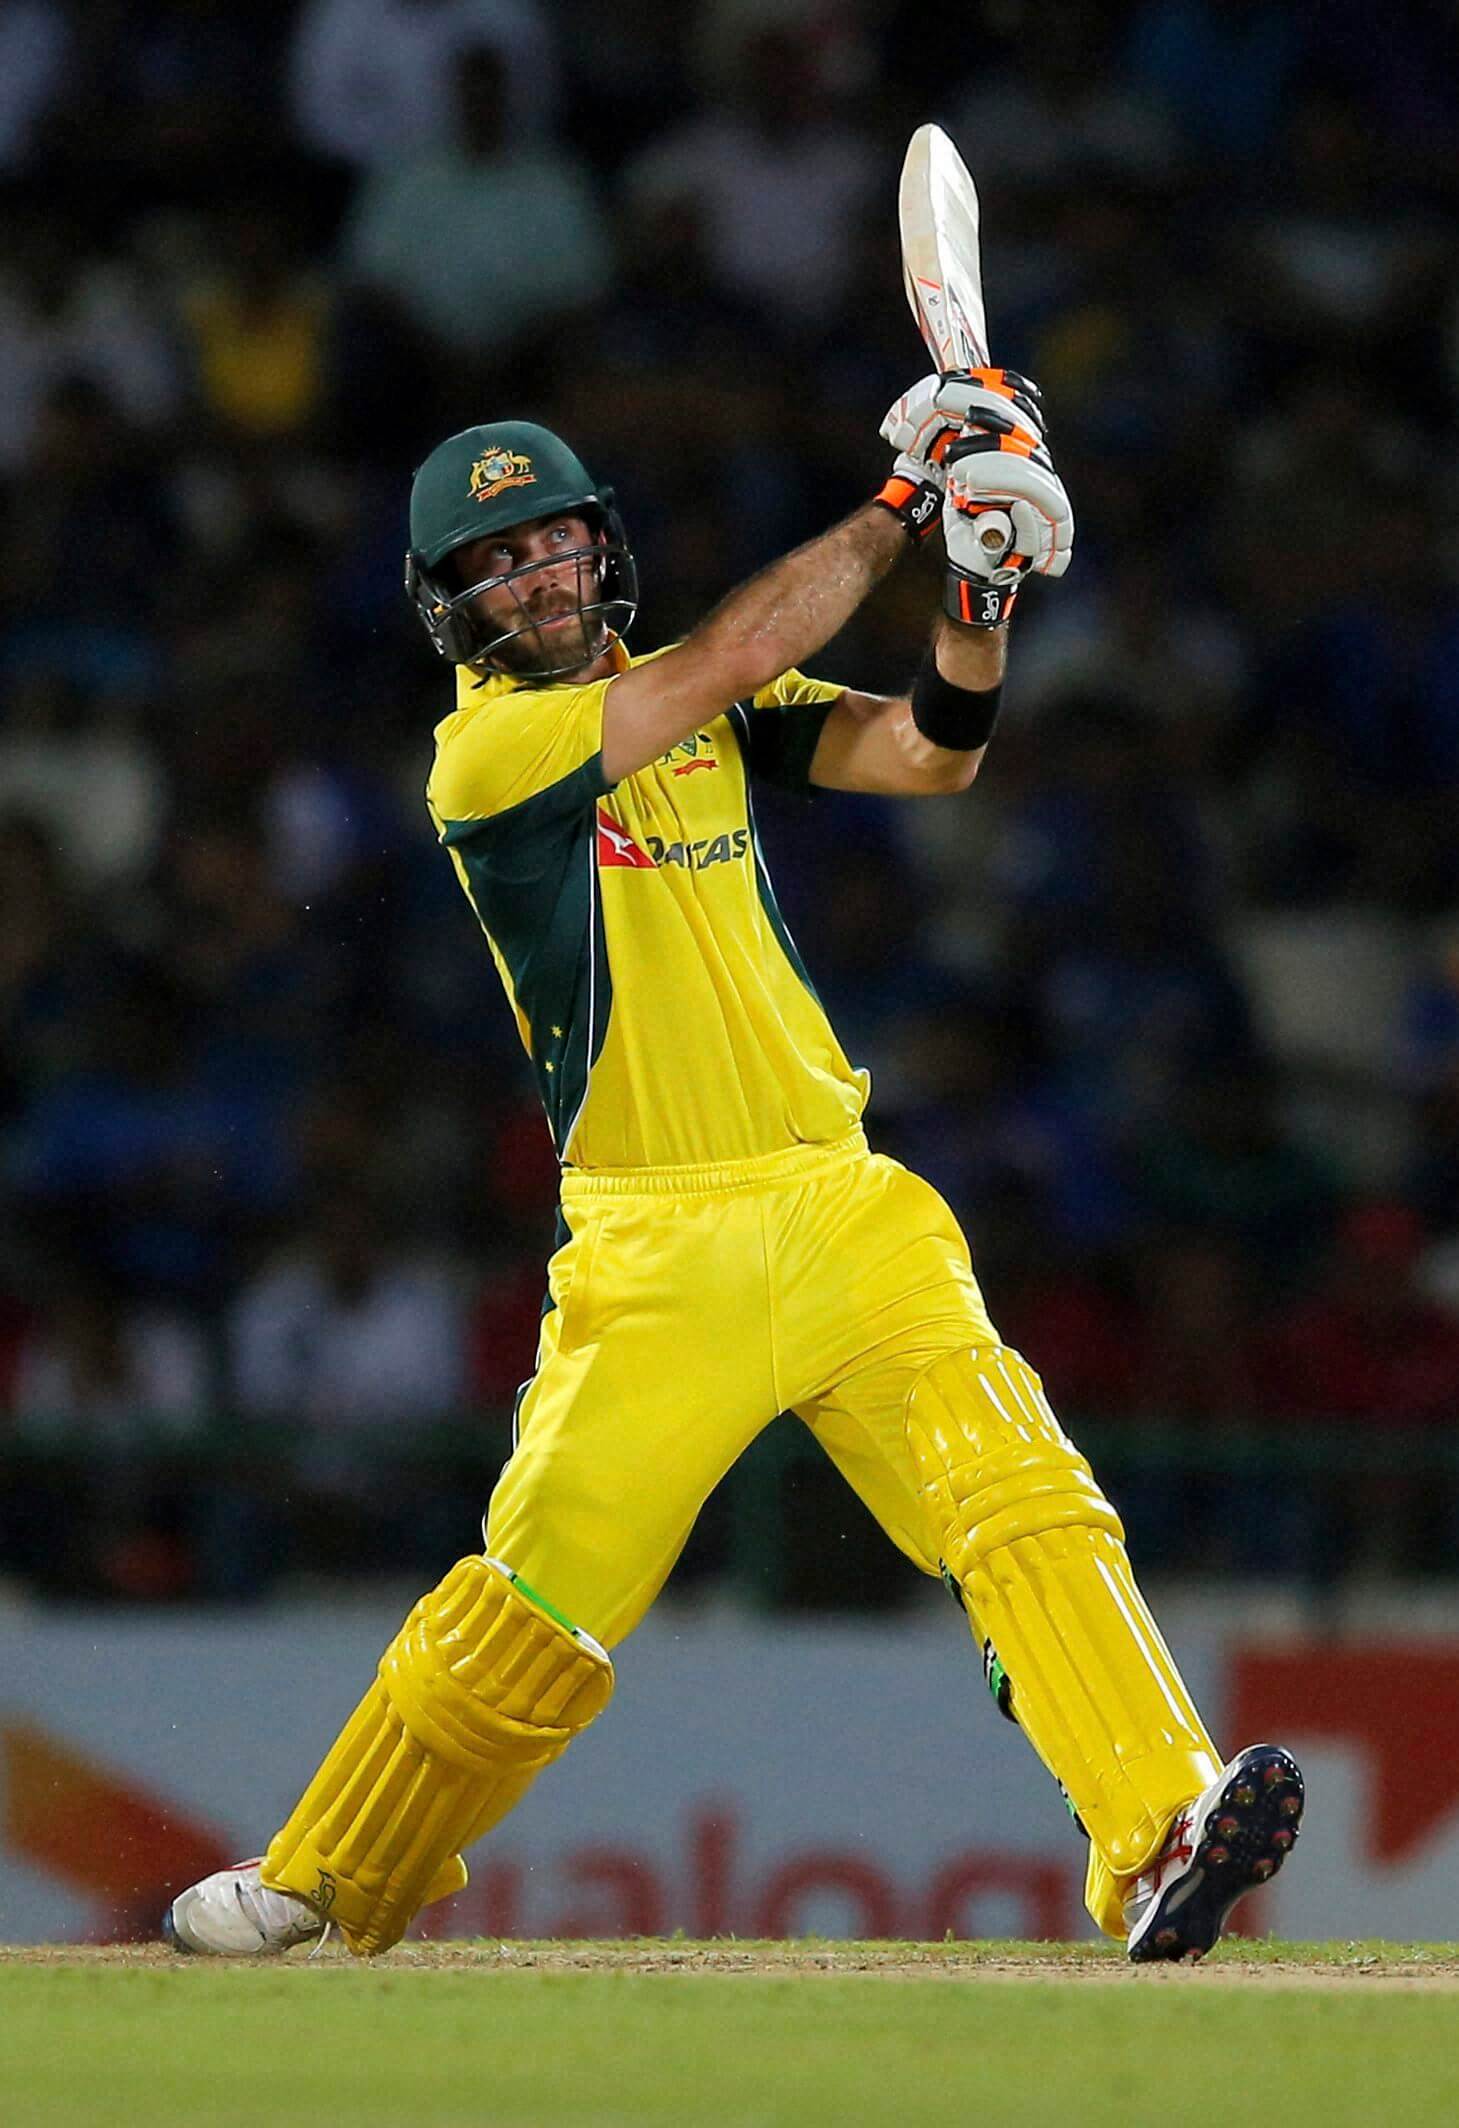 Maxwell Scores 145 To Take Australia To Highest T20I Score Ever and Smash Sri Lanka